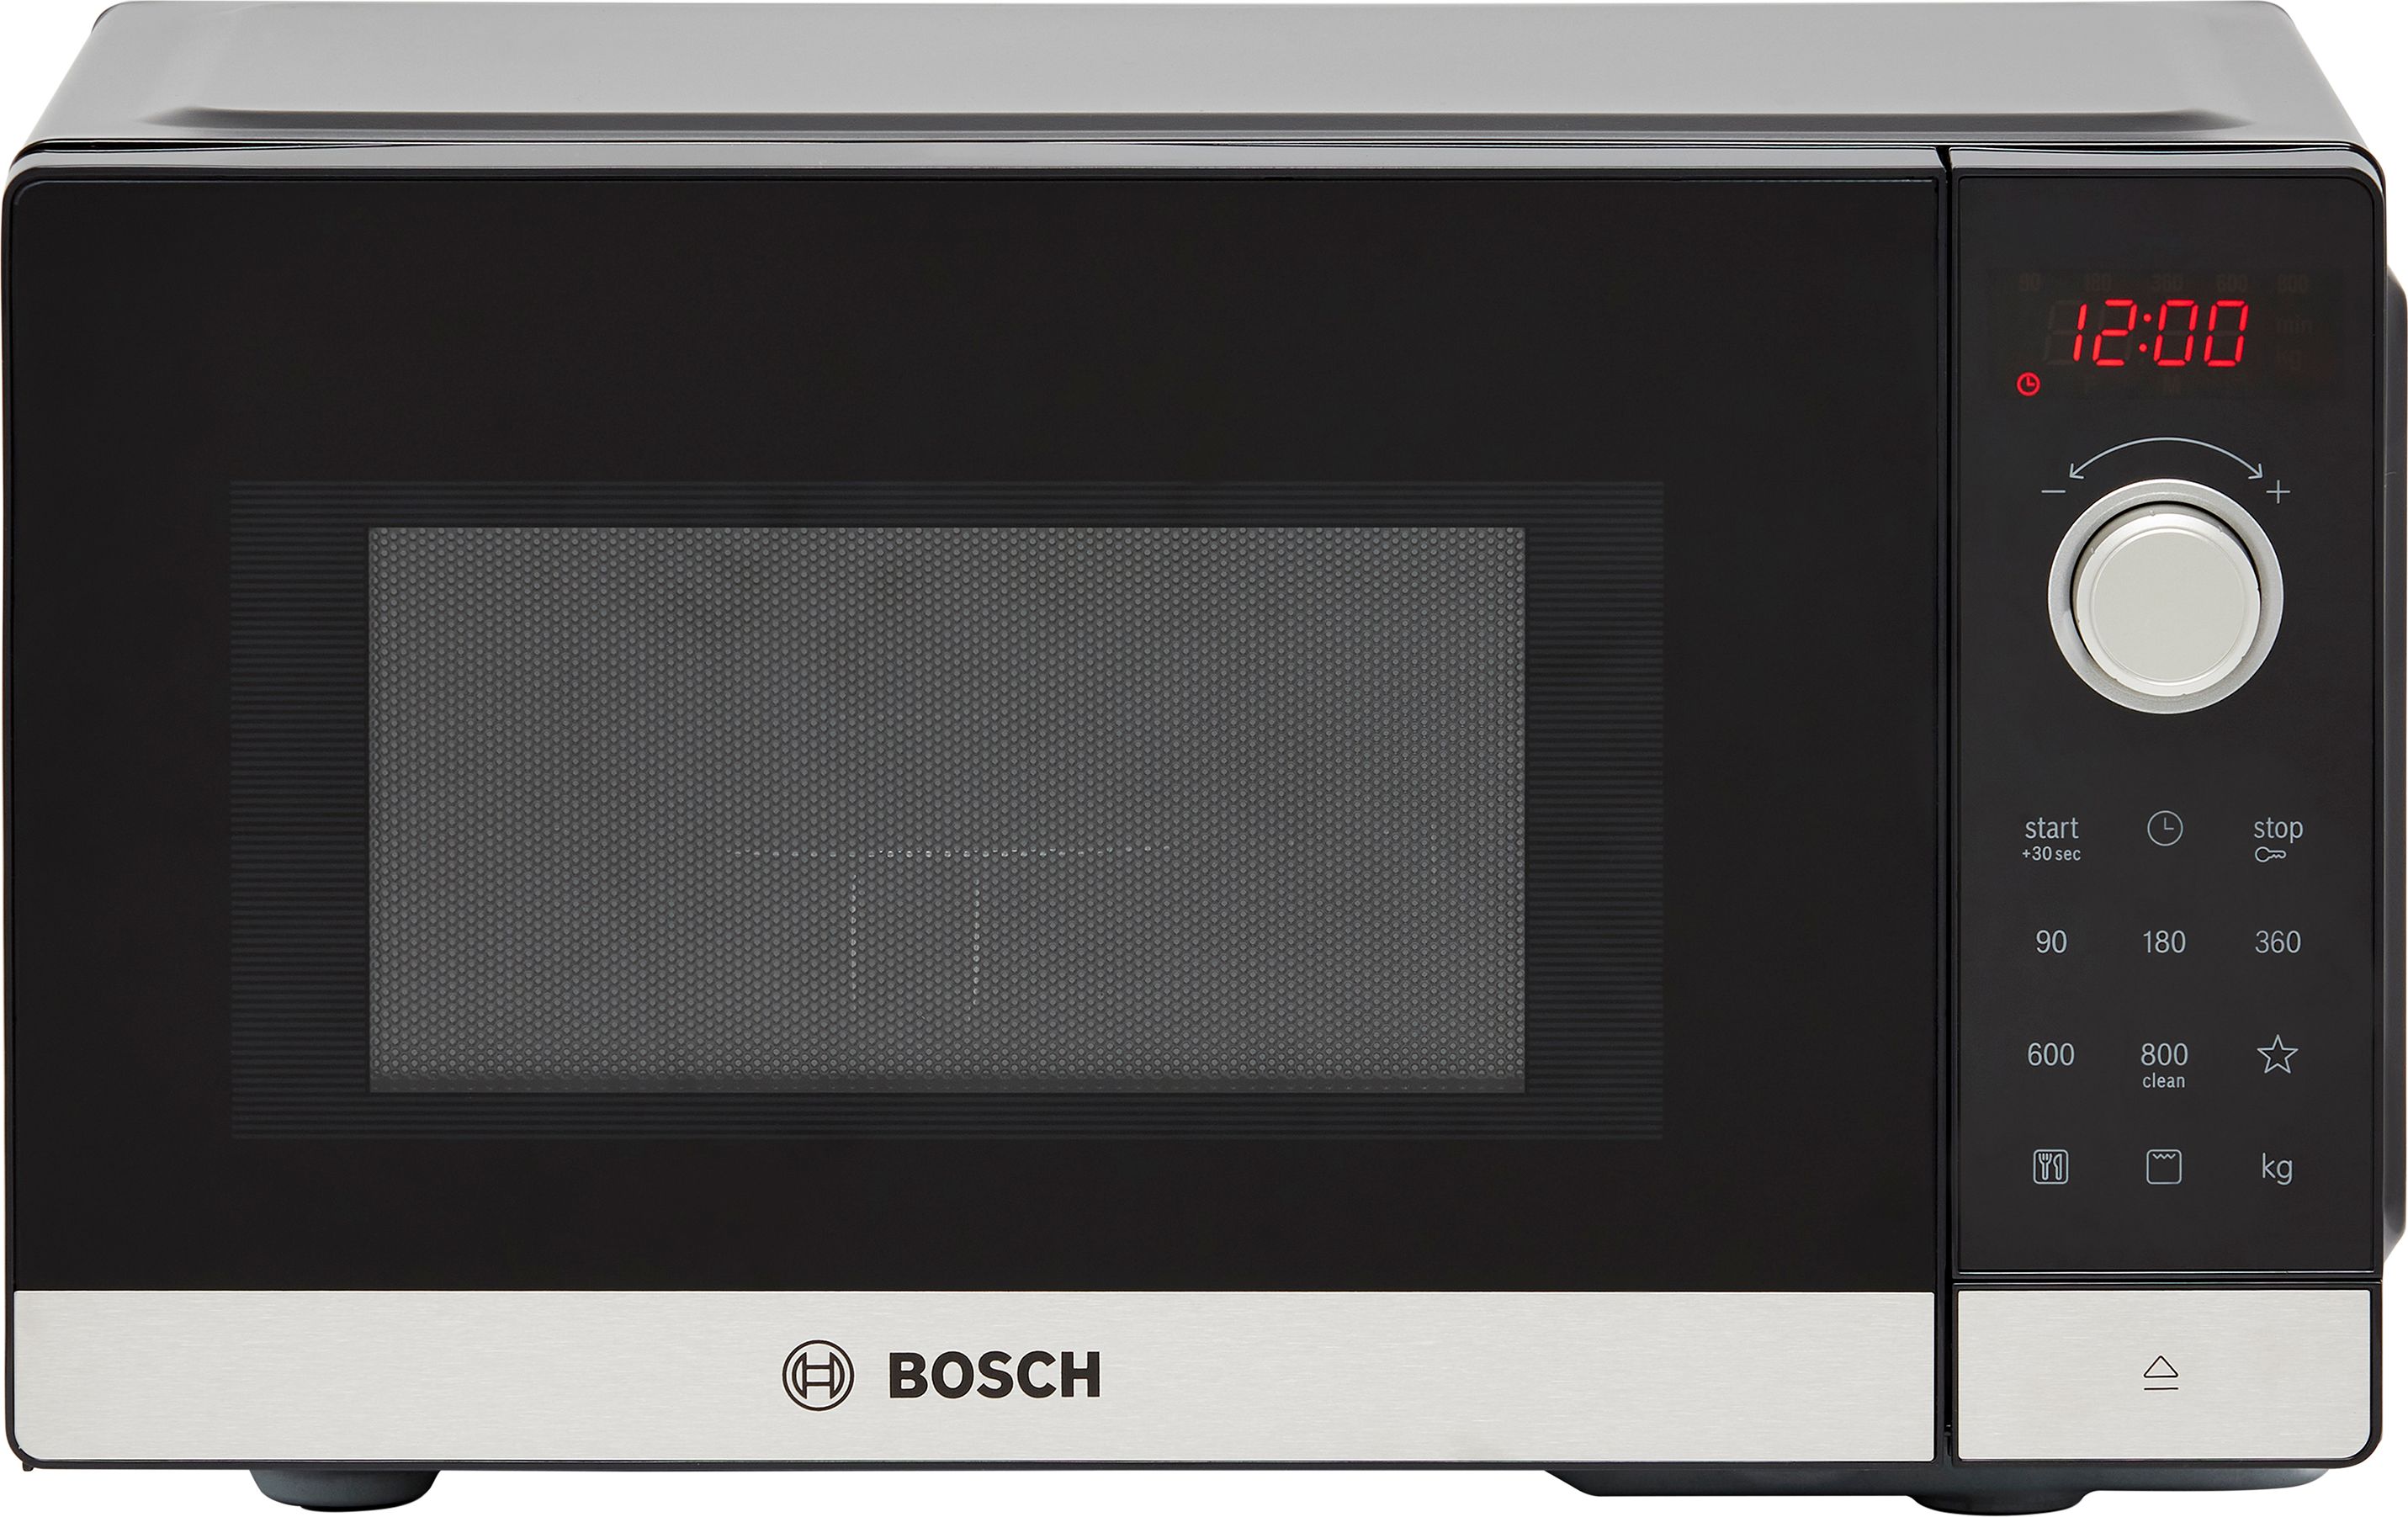 Bosch Series 2 FEL023MS2B 26cm tall, 44cm wide, Freestanding Compact Microwave - Black / Stainless Steel, Black